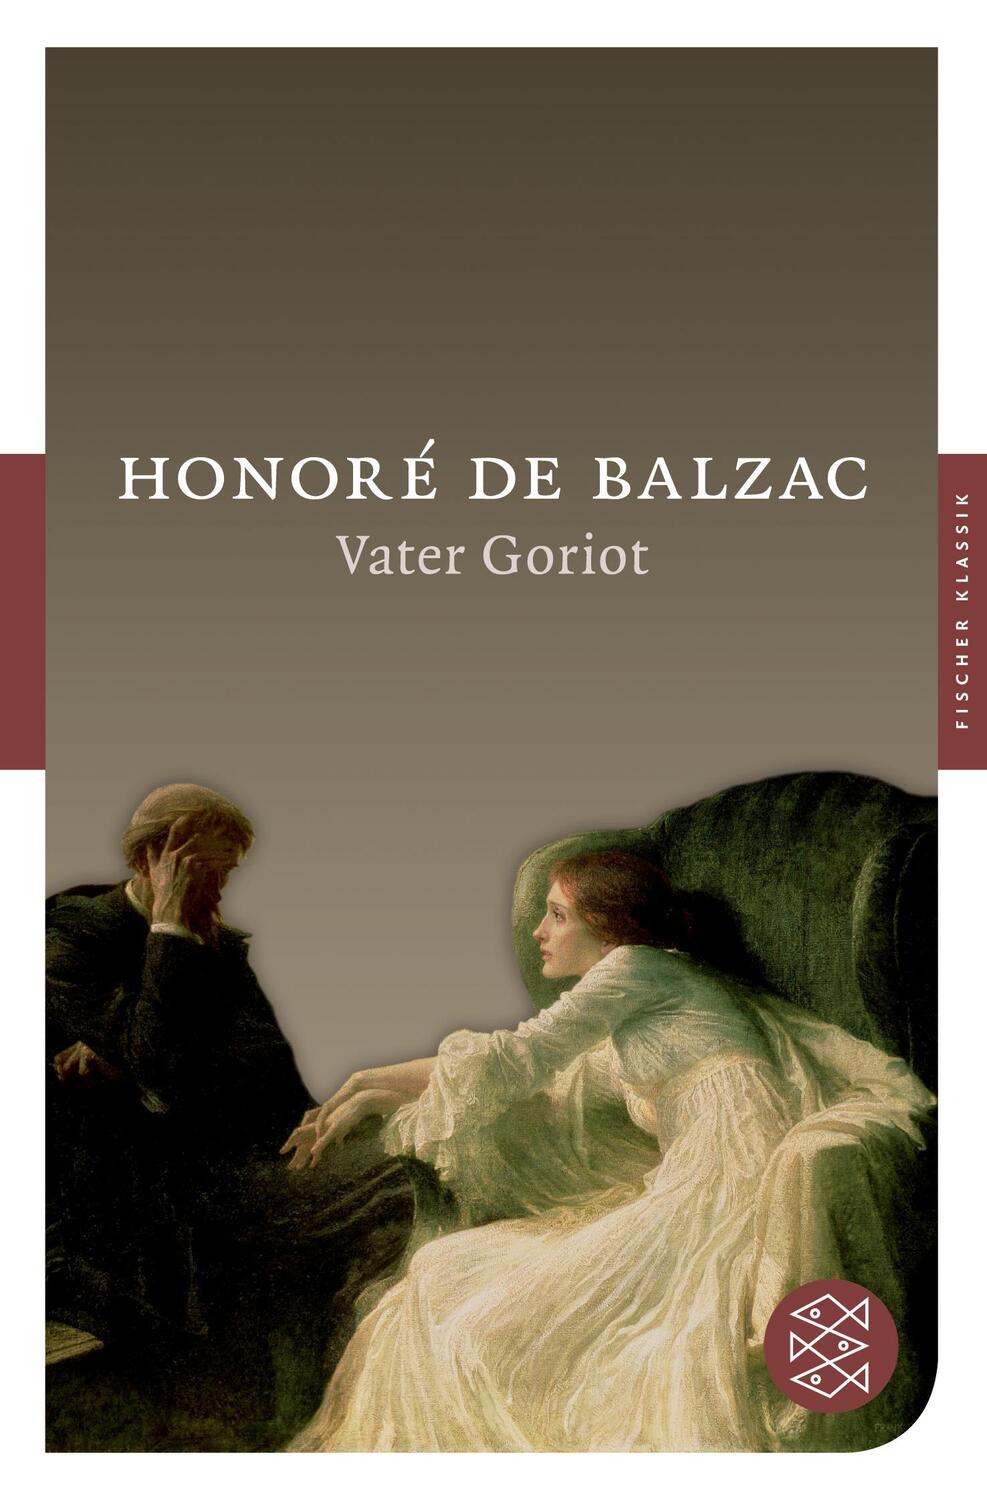 Vater Goriot - Balzac, Honoré de